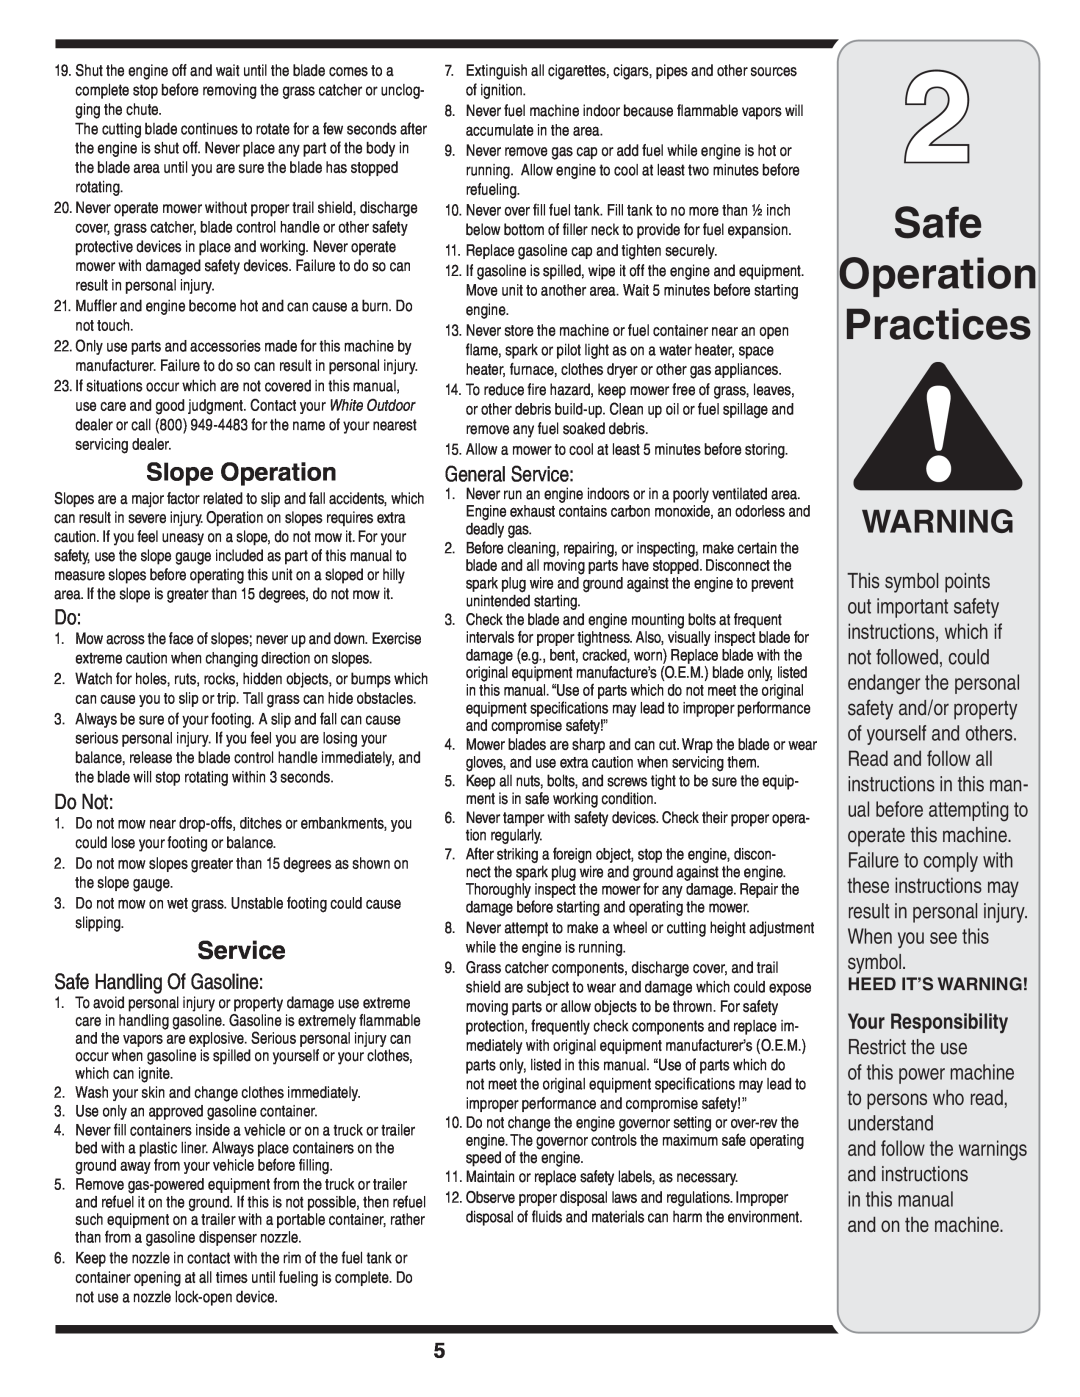 White Outdoor 54M manual Safe Operation Practices, Slope Operation, Do Not, Safe Handling Of Gasoline, General Service 